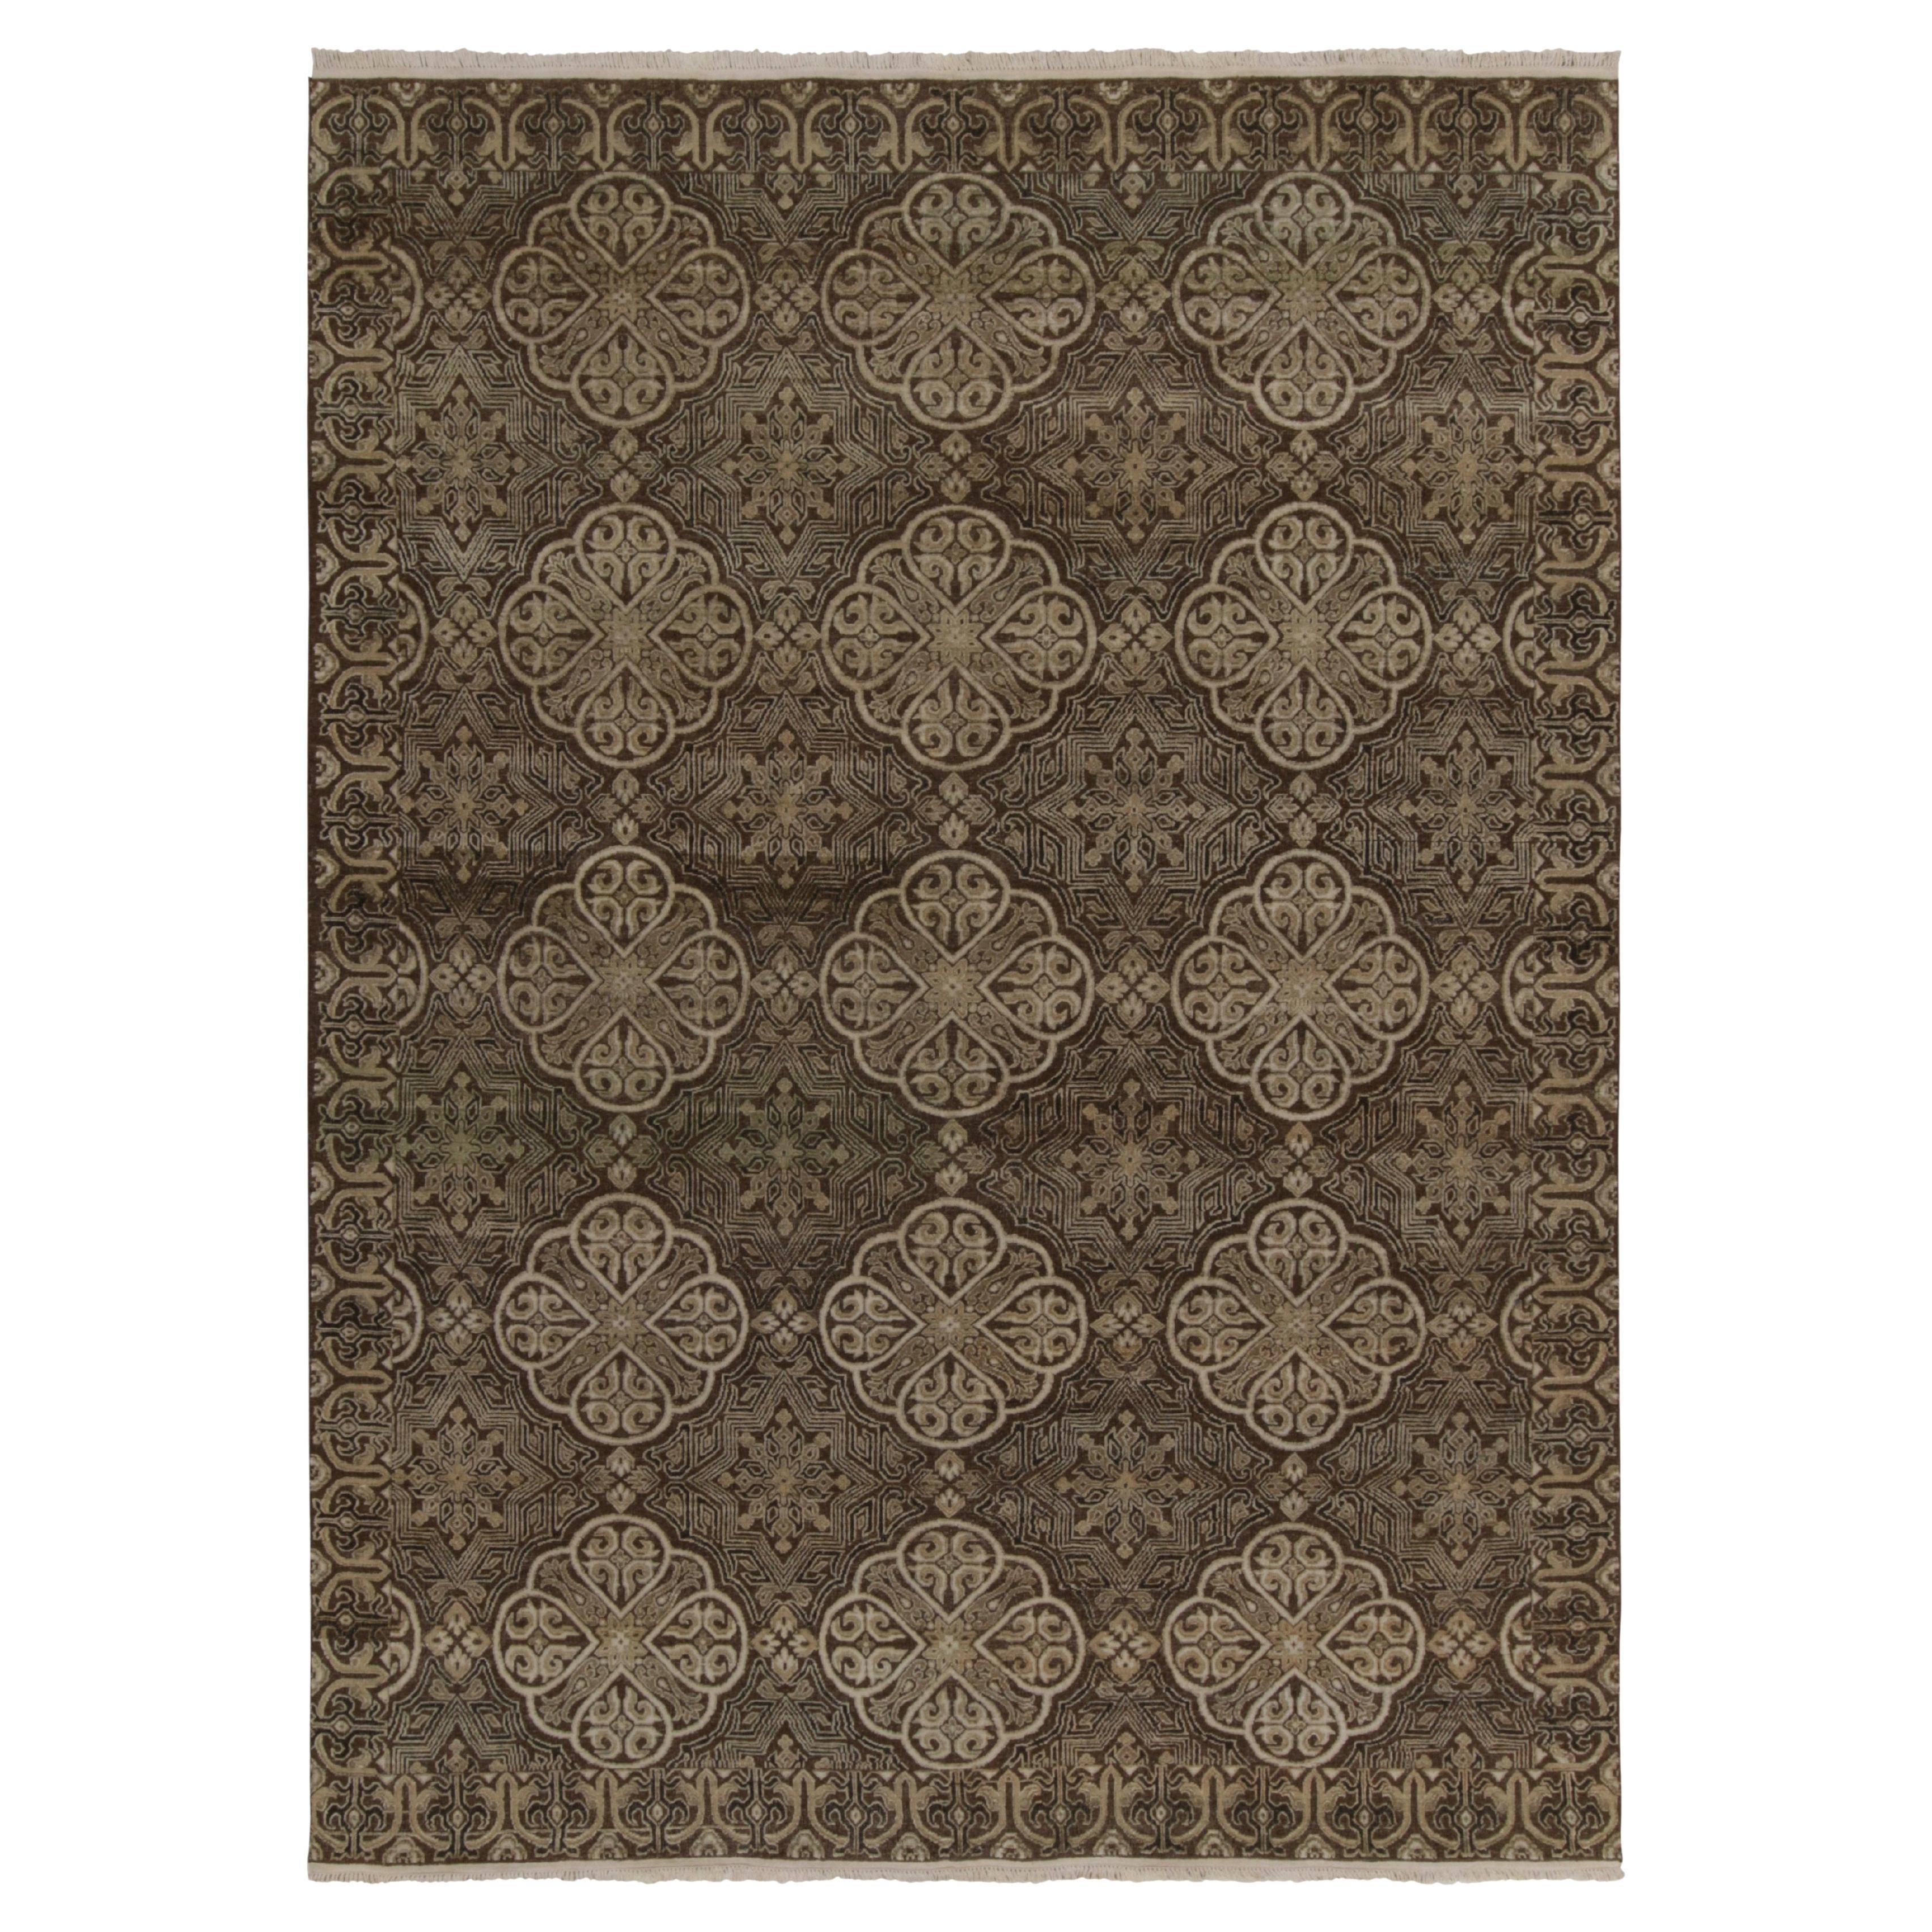 Rug & Kilim’s Spanish Classic style rug in Beige-Brown, Black Geometric Patterns